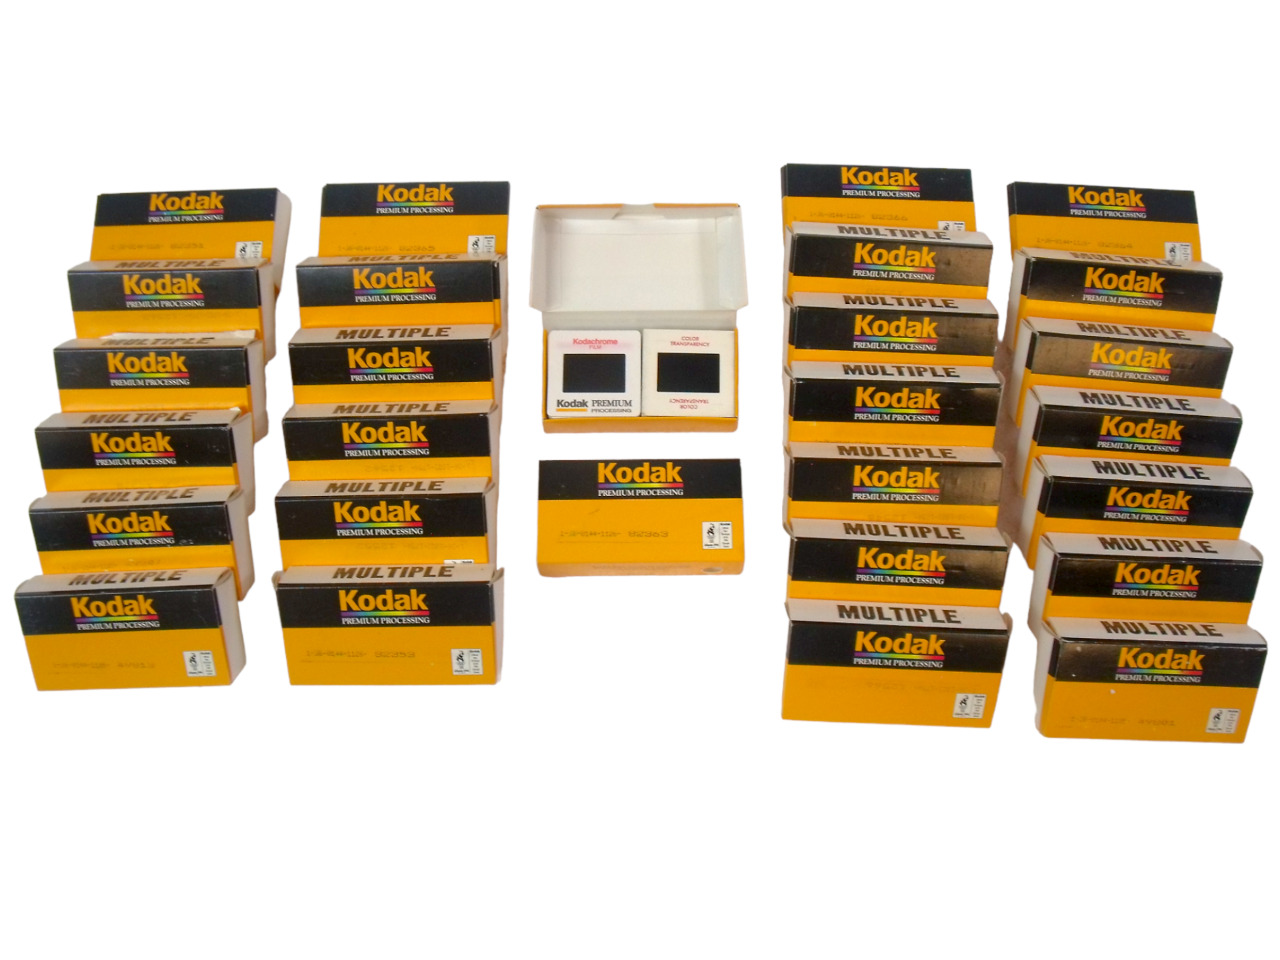 (Lot of 1000) Vintage Kodak Photo Film Slides 1980s-90s Amateur Pictures Labeled